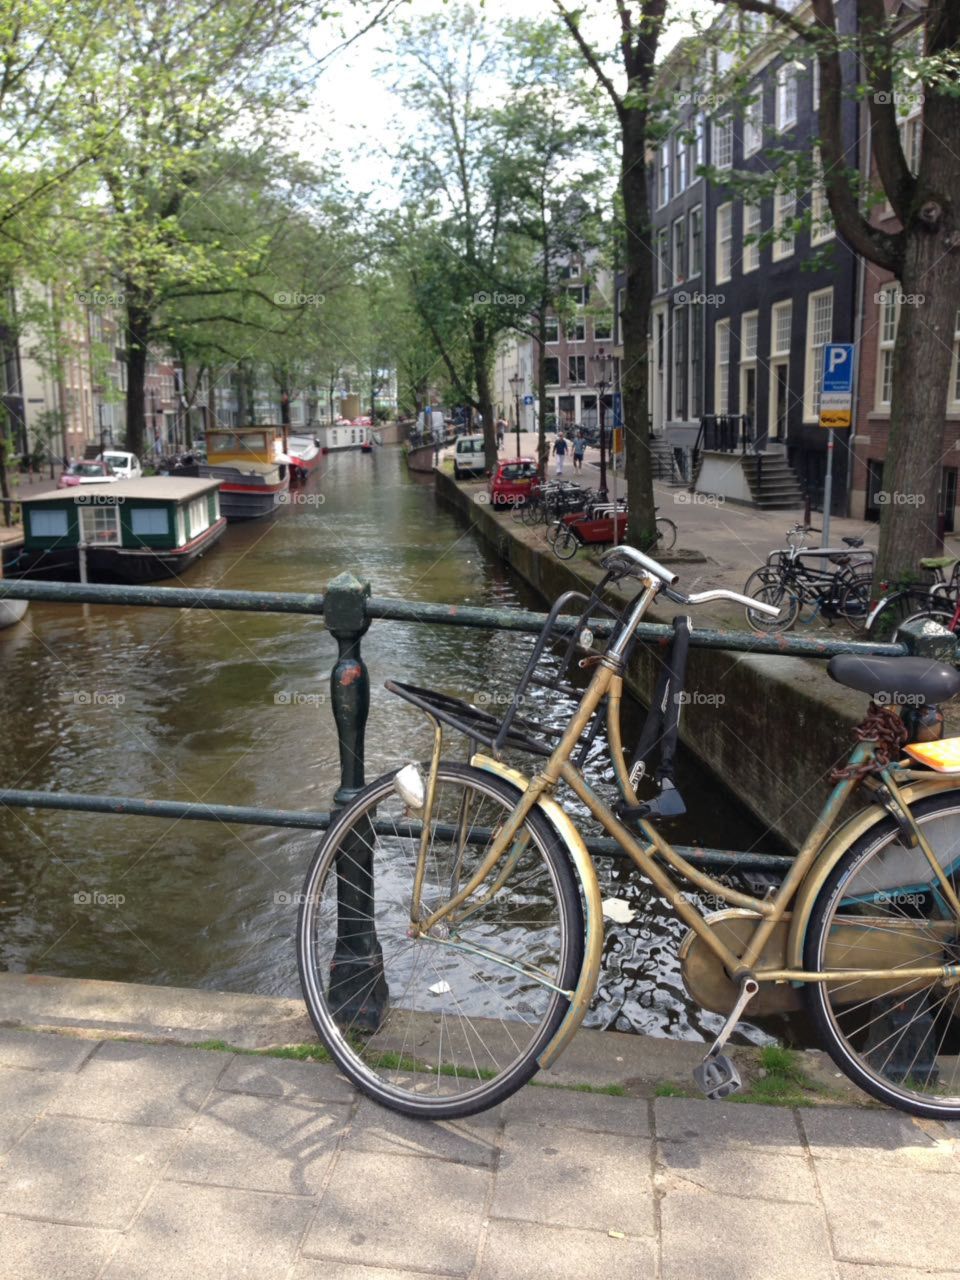 #AmsterdamBridge